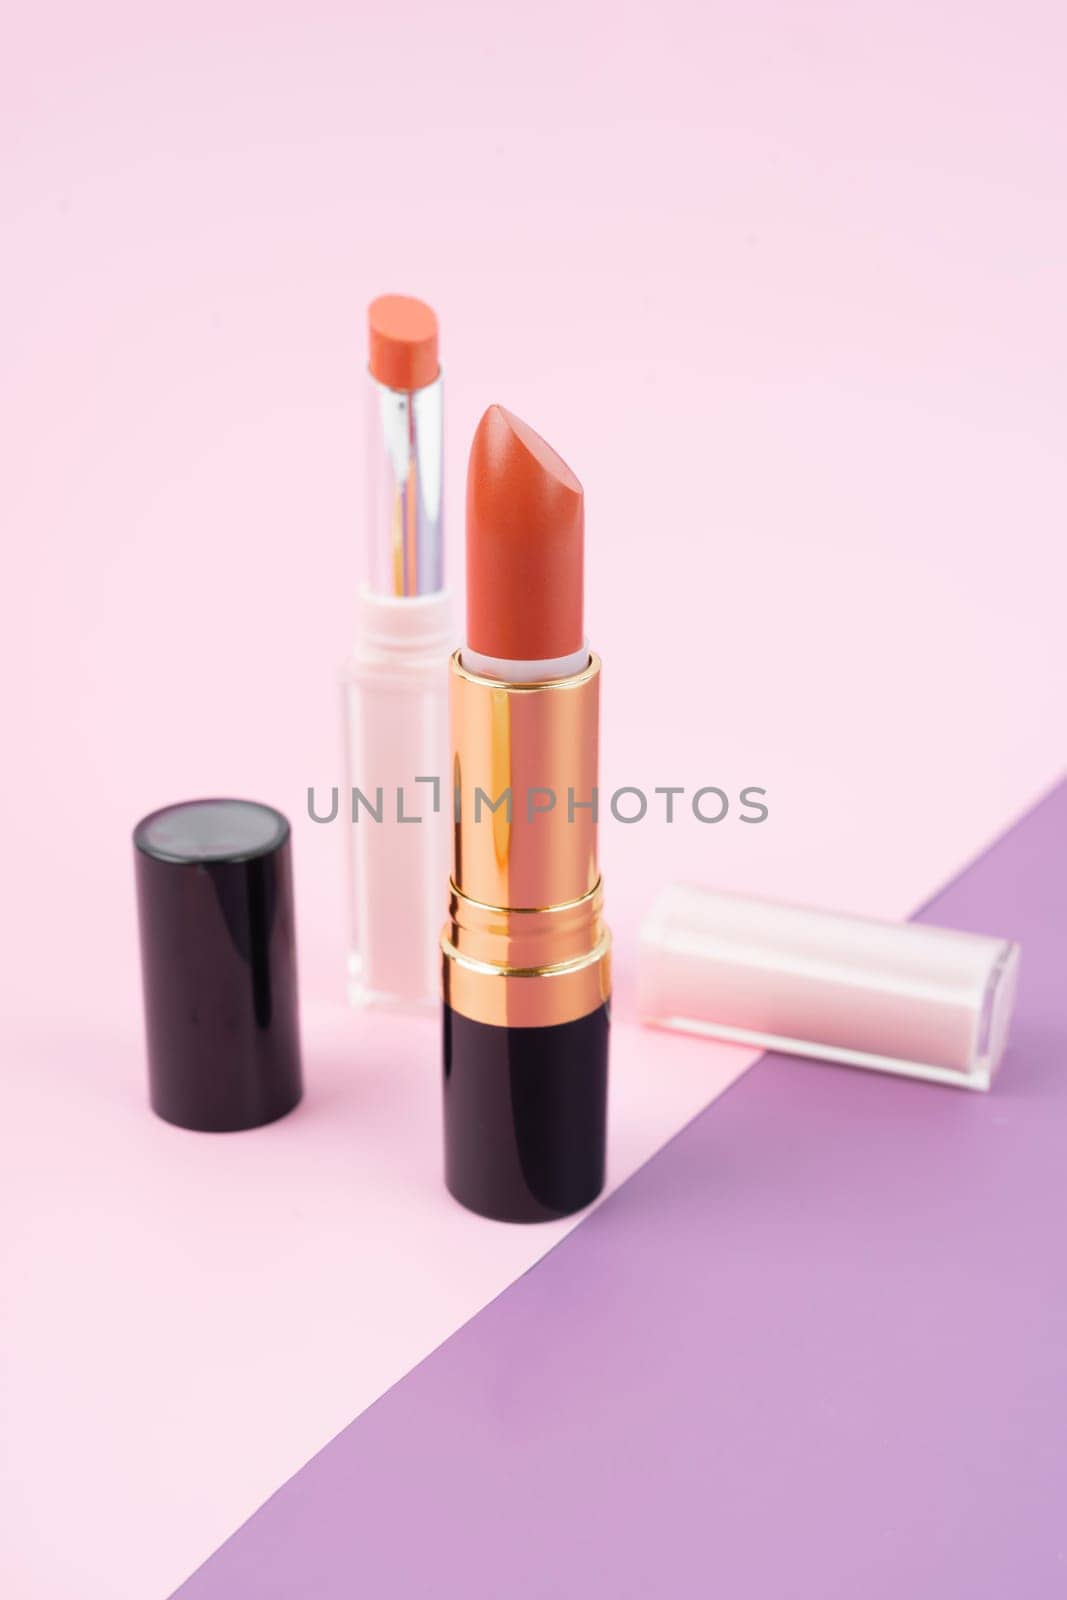 The Orange color lipsticks on beautiful background. by Gamjai